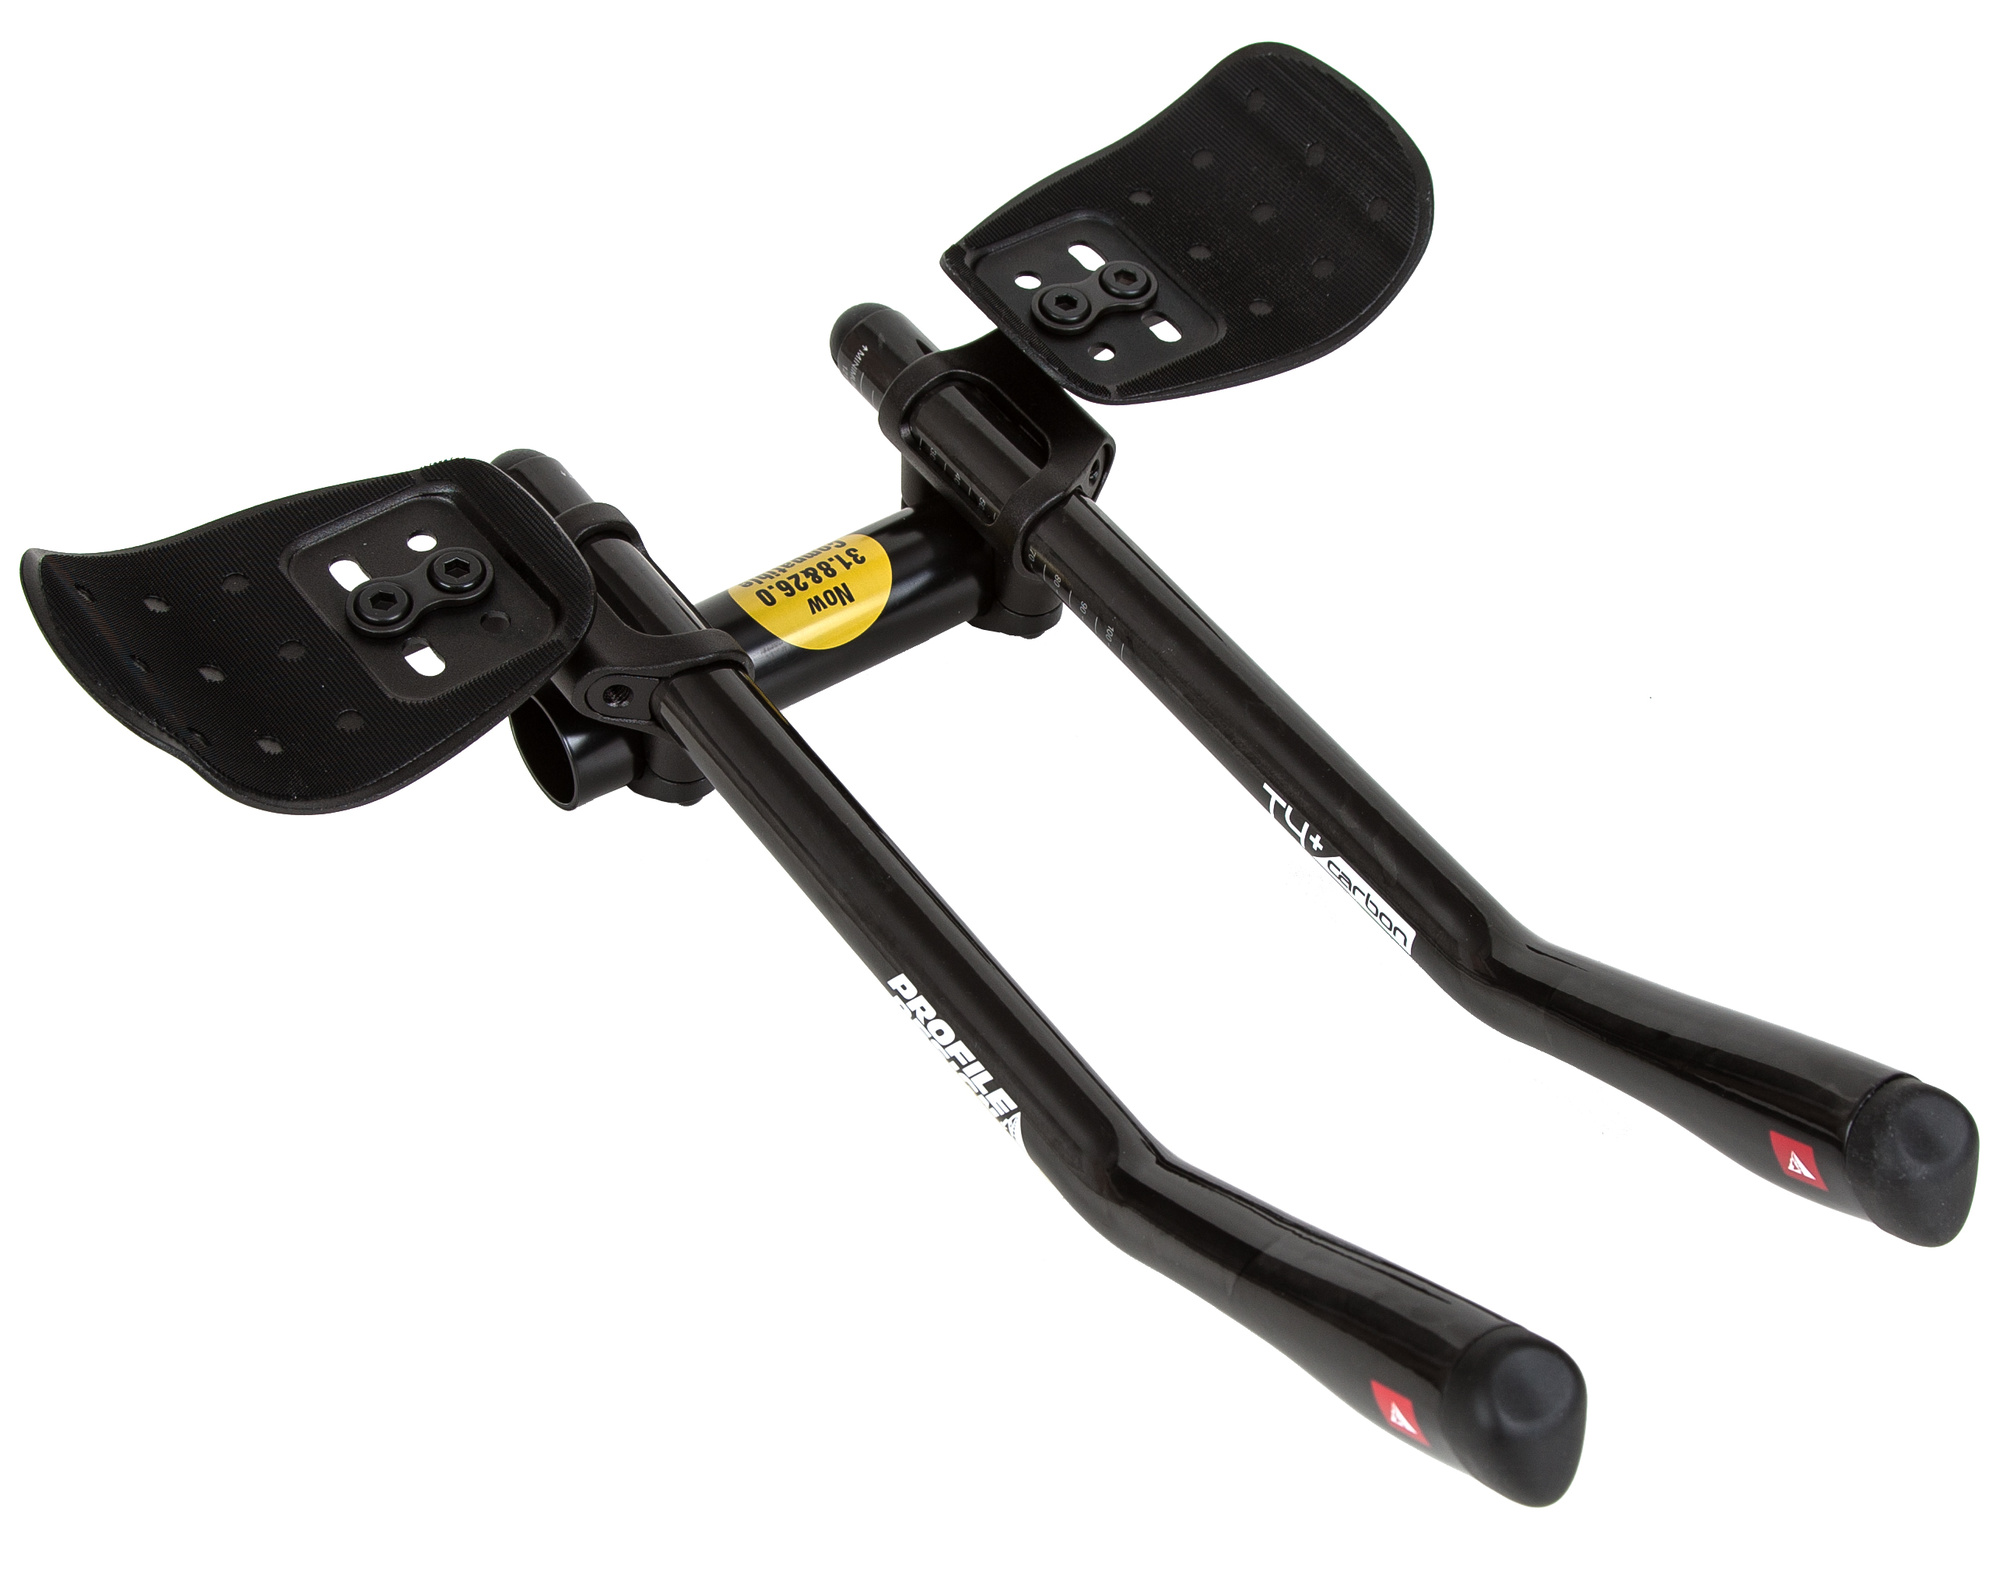 Mier oplichterij eenheid Profile Design T4 Plus Carbon - Lenkeraufsatz mit flachen Shallow Angle  Ski-Bend Extensions J4 Brackets & F35 Auflagen - multisportartikel.de